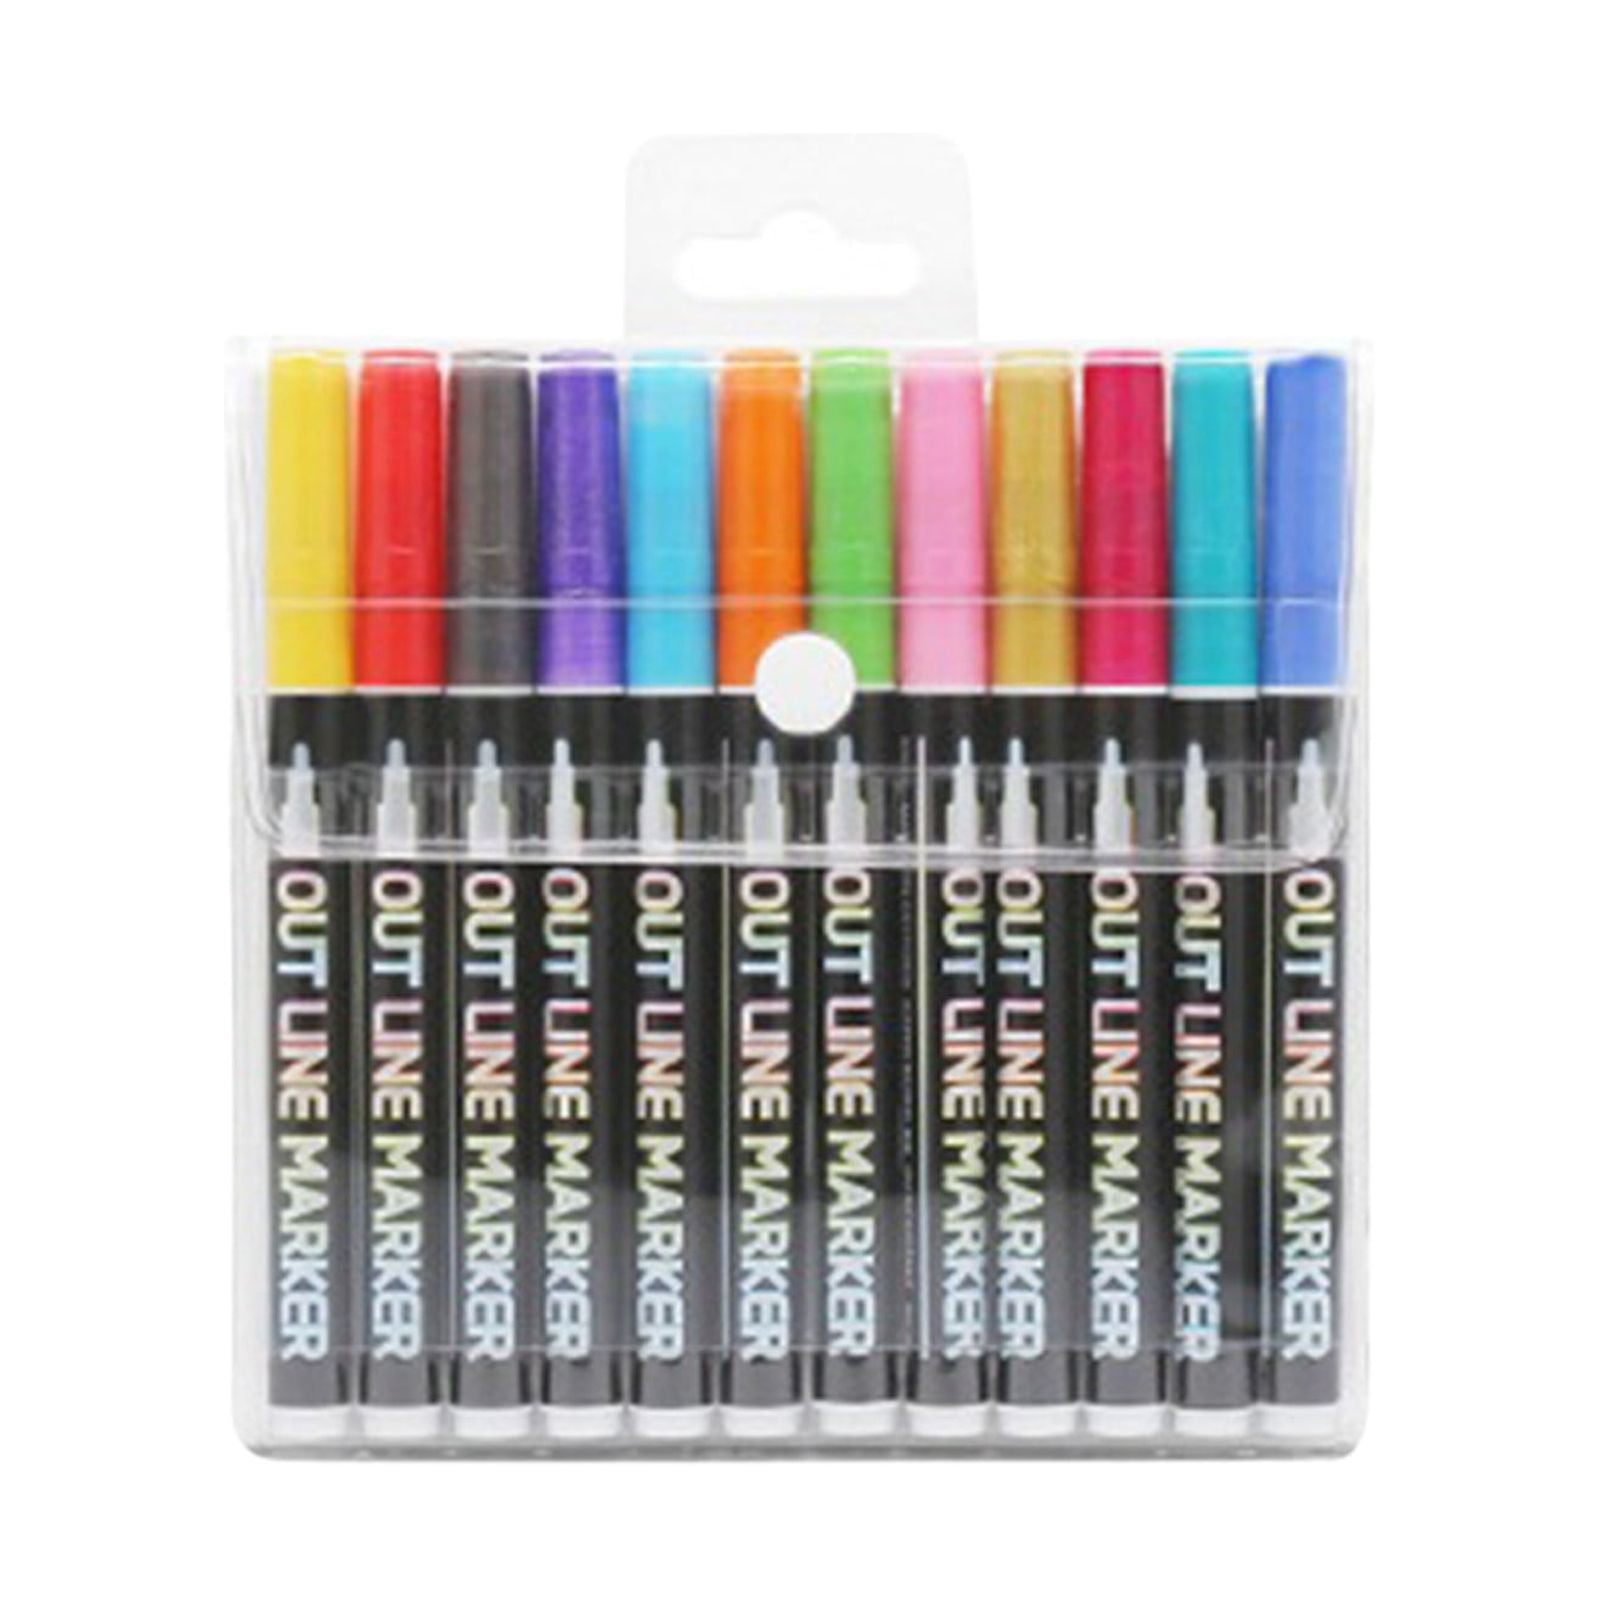 duhgbne nail pens set 12 colors acrylic paint pens fine tip nail pens for  3d nail line drawing dotting floral design diy nail 10ml 